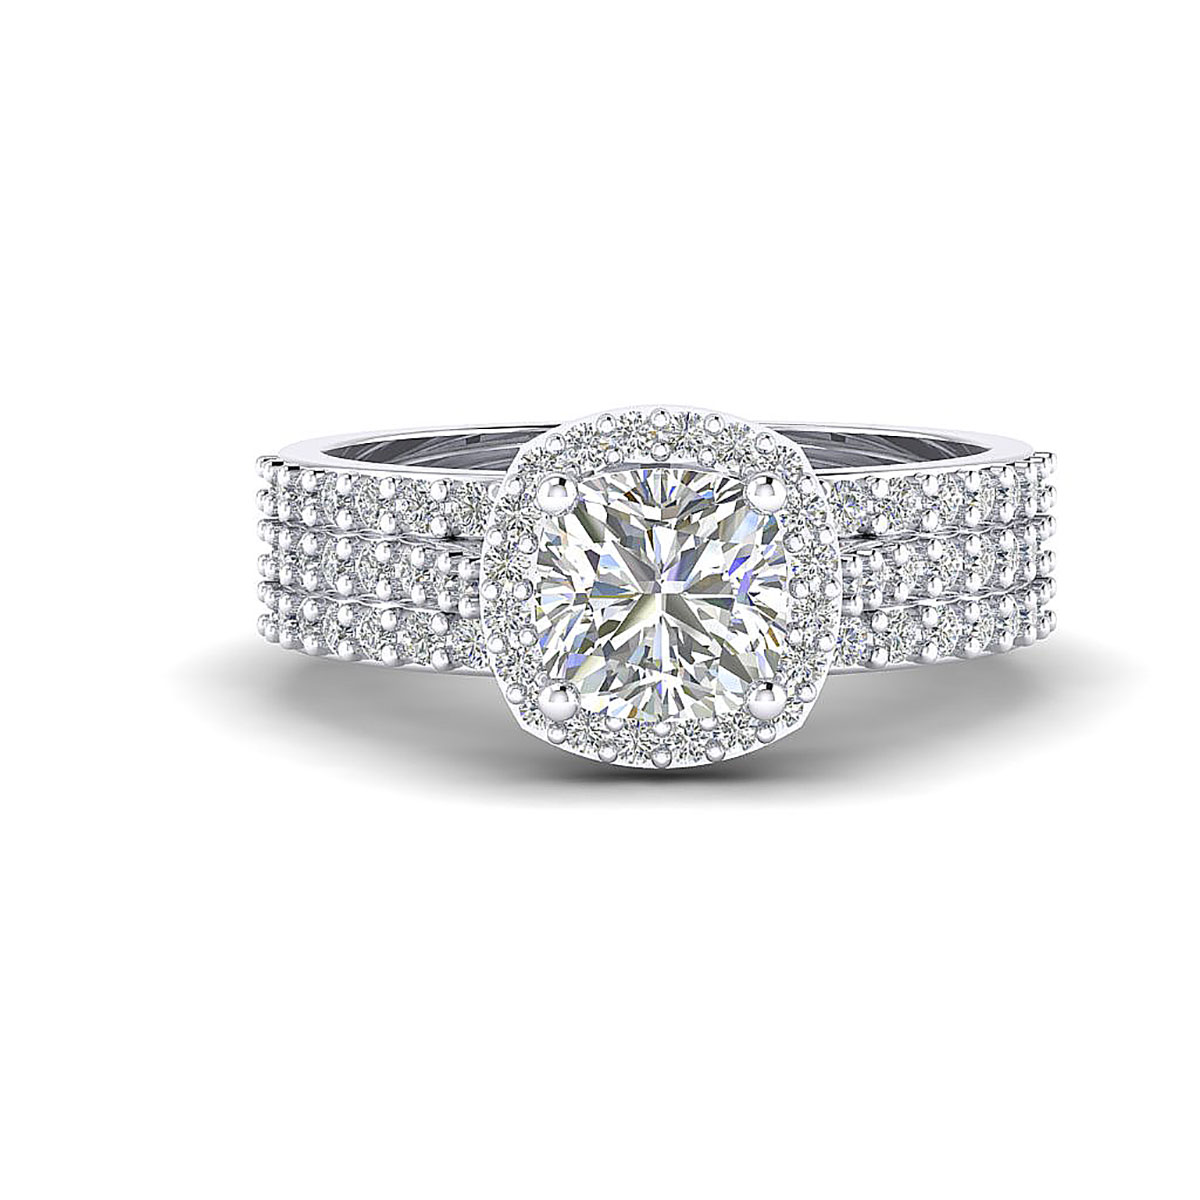 22k Gold Diamond Ring Set - Michele Mercaldo Jewelry